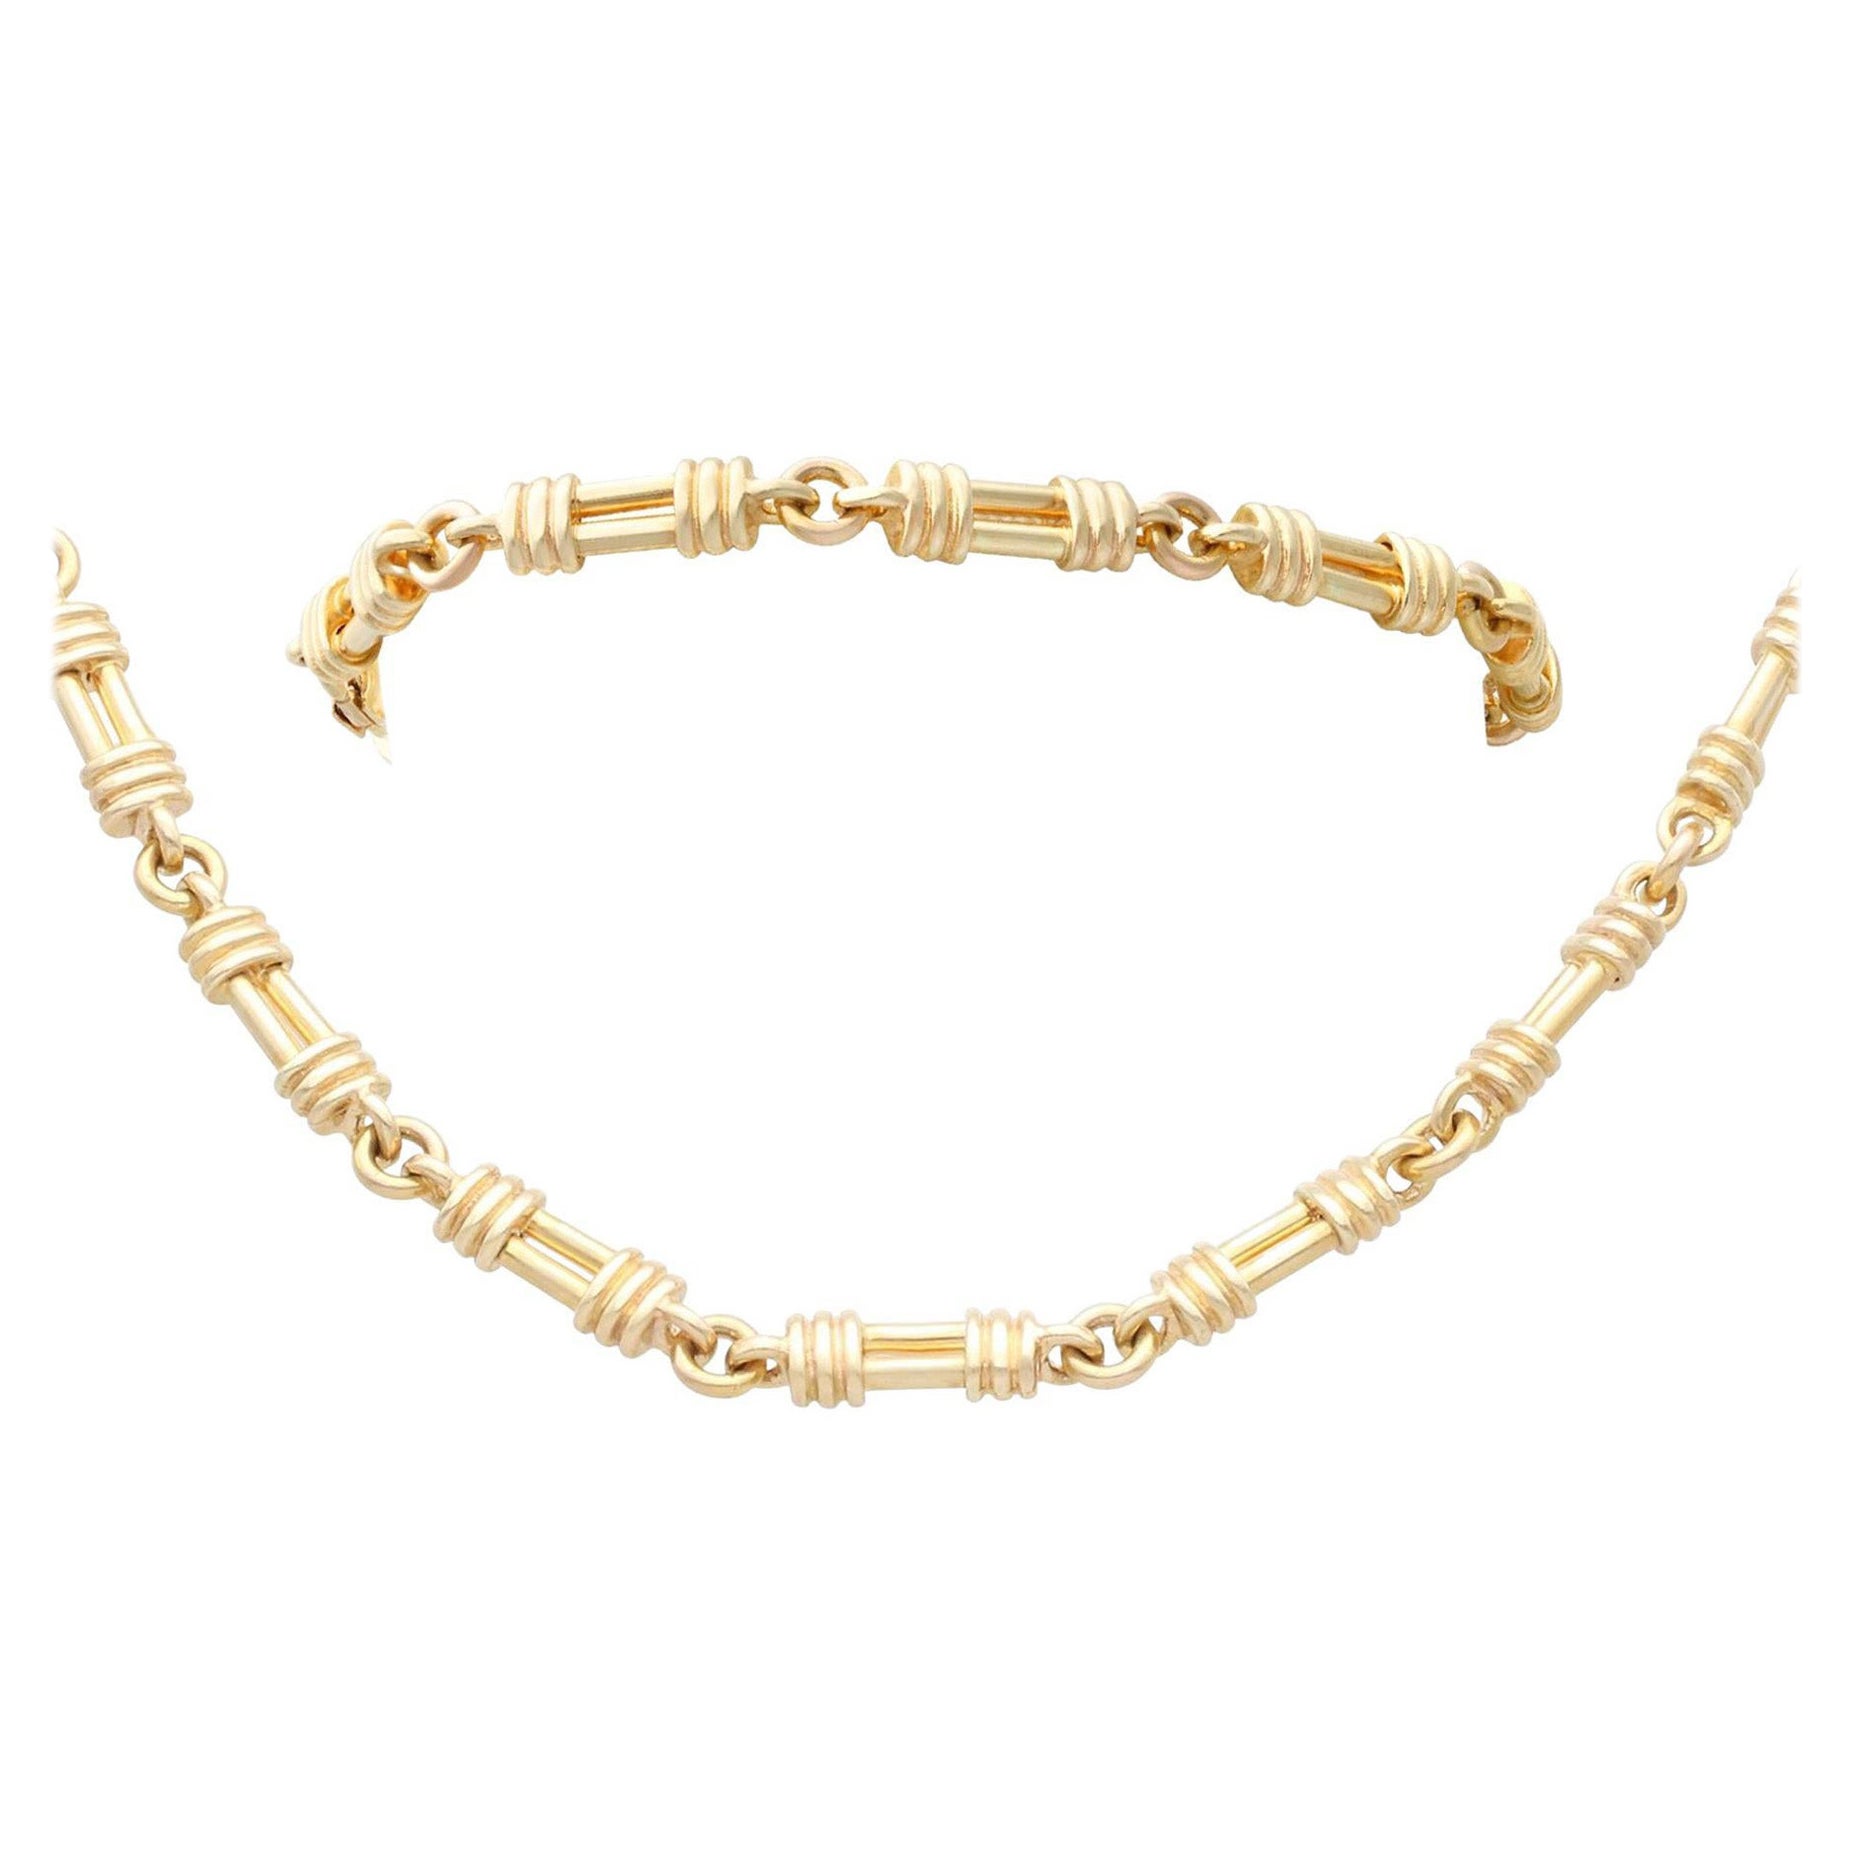 Vintage 1996 Yellow Gold Necklace and Bracelet Set by UnoAErre